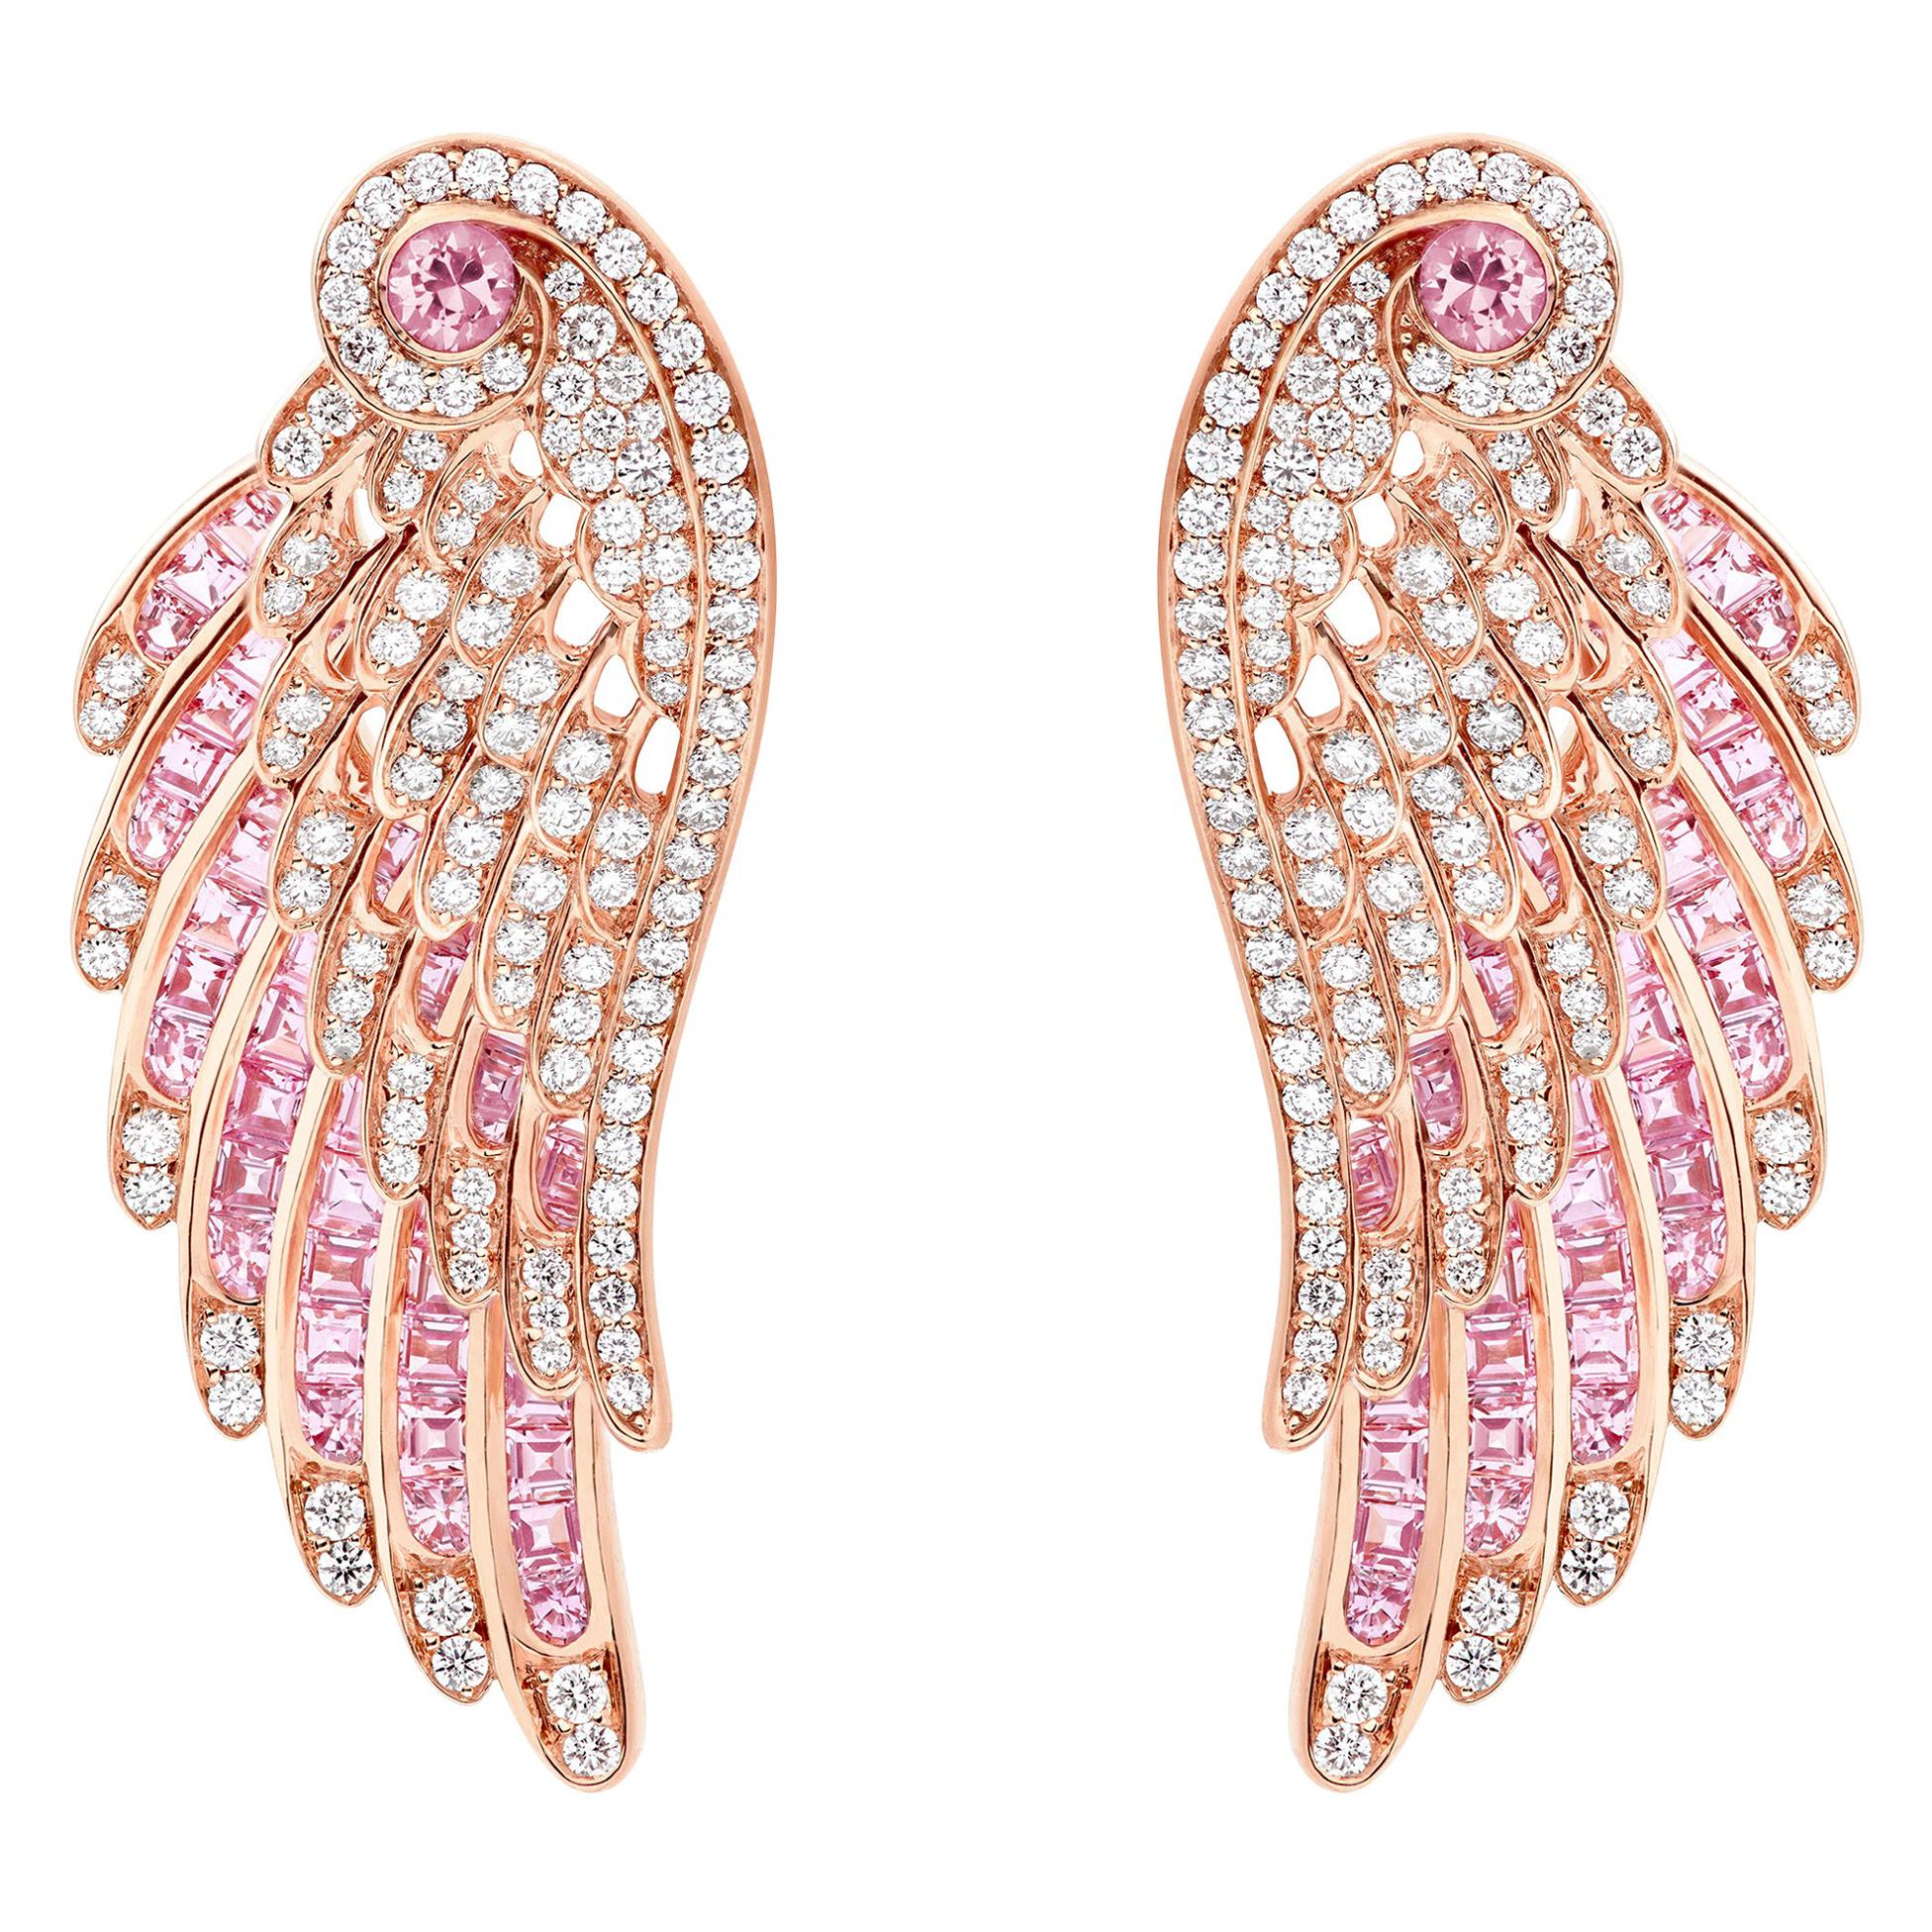 Garrard 'Wings Embrace' 18 Karat Rose Gold White Diamond Pink Sapphire Earrings For Sale